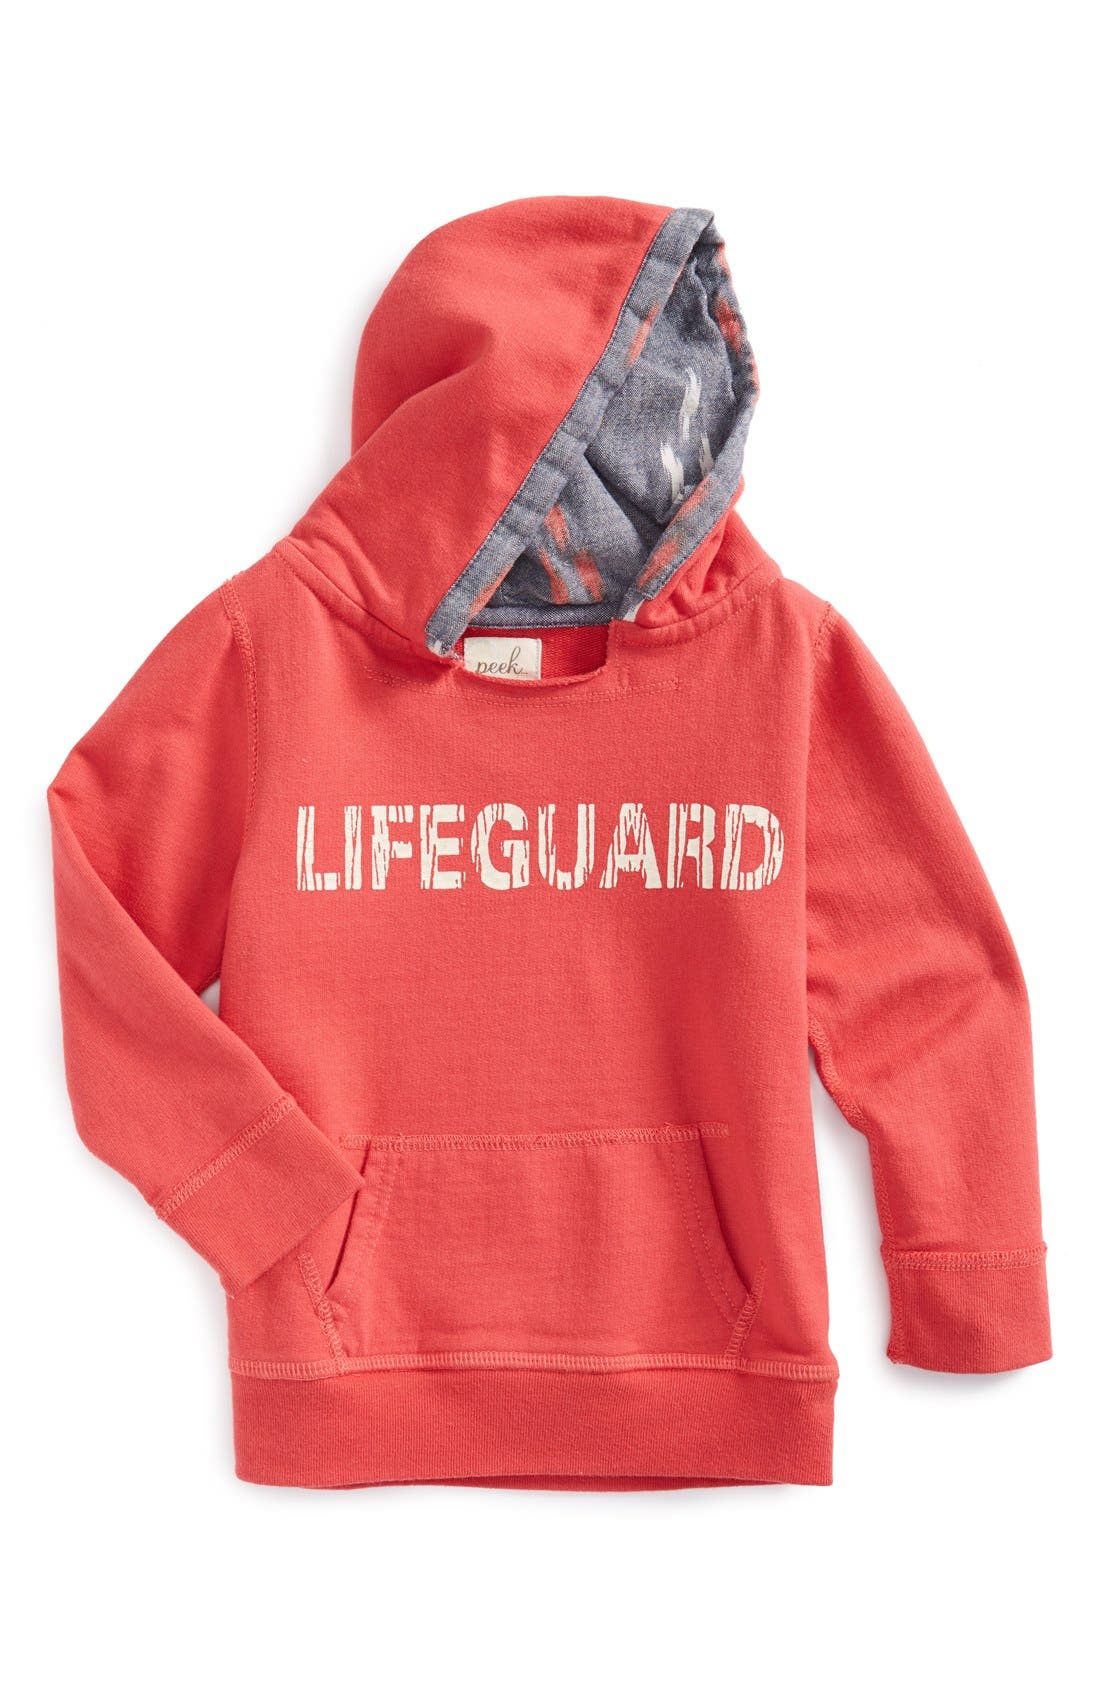 lifeguard hoodie boys